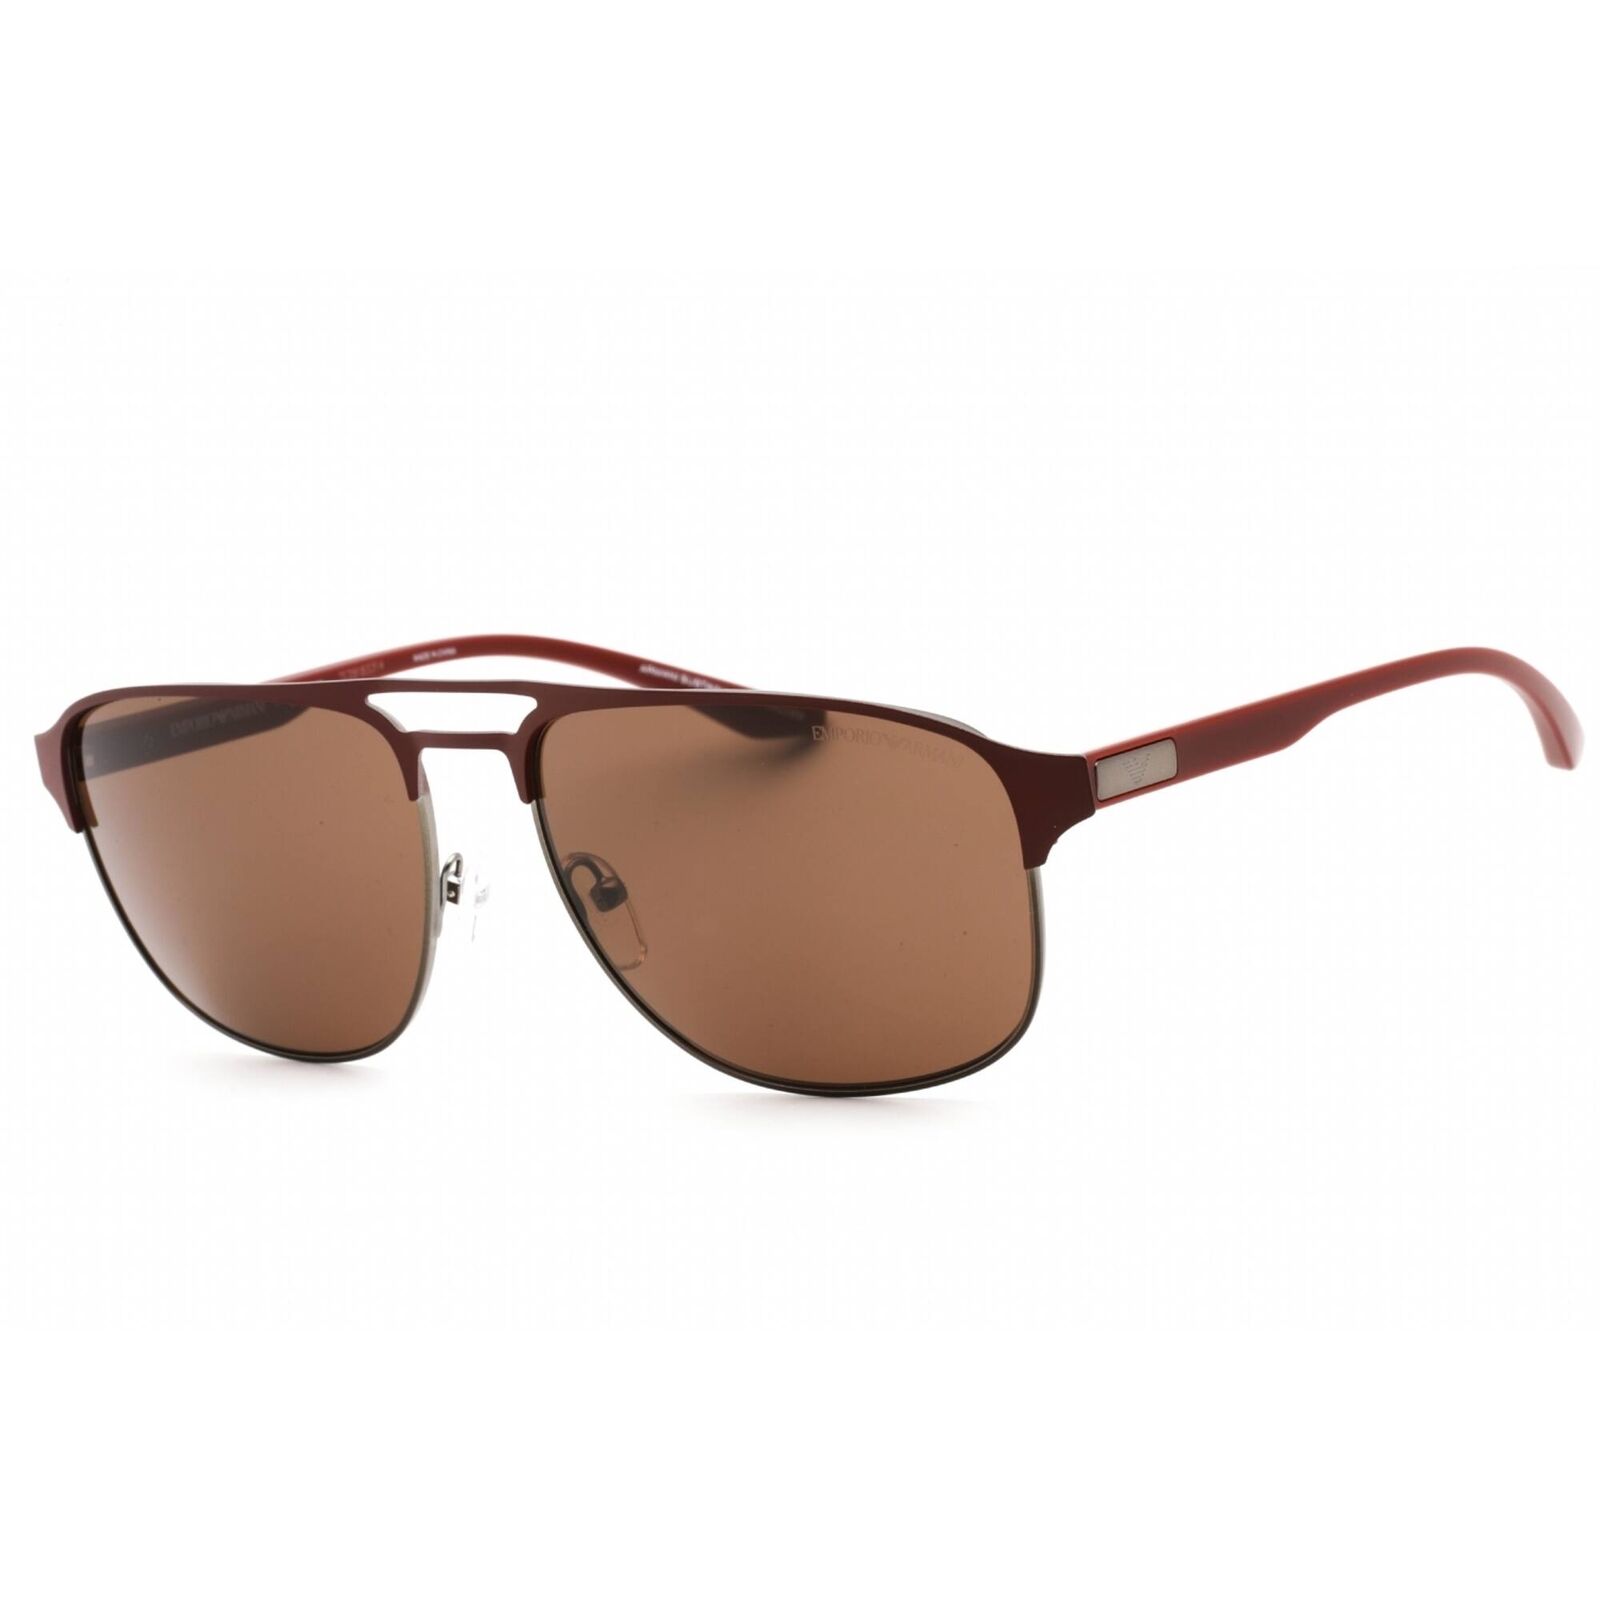 Emporio Armani Men's Sunglasses Matte Gunmetal/Burgundy Frame 0EA2144 336673 Emporio Armani 0EA2144 336673